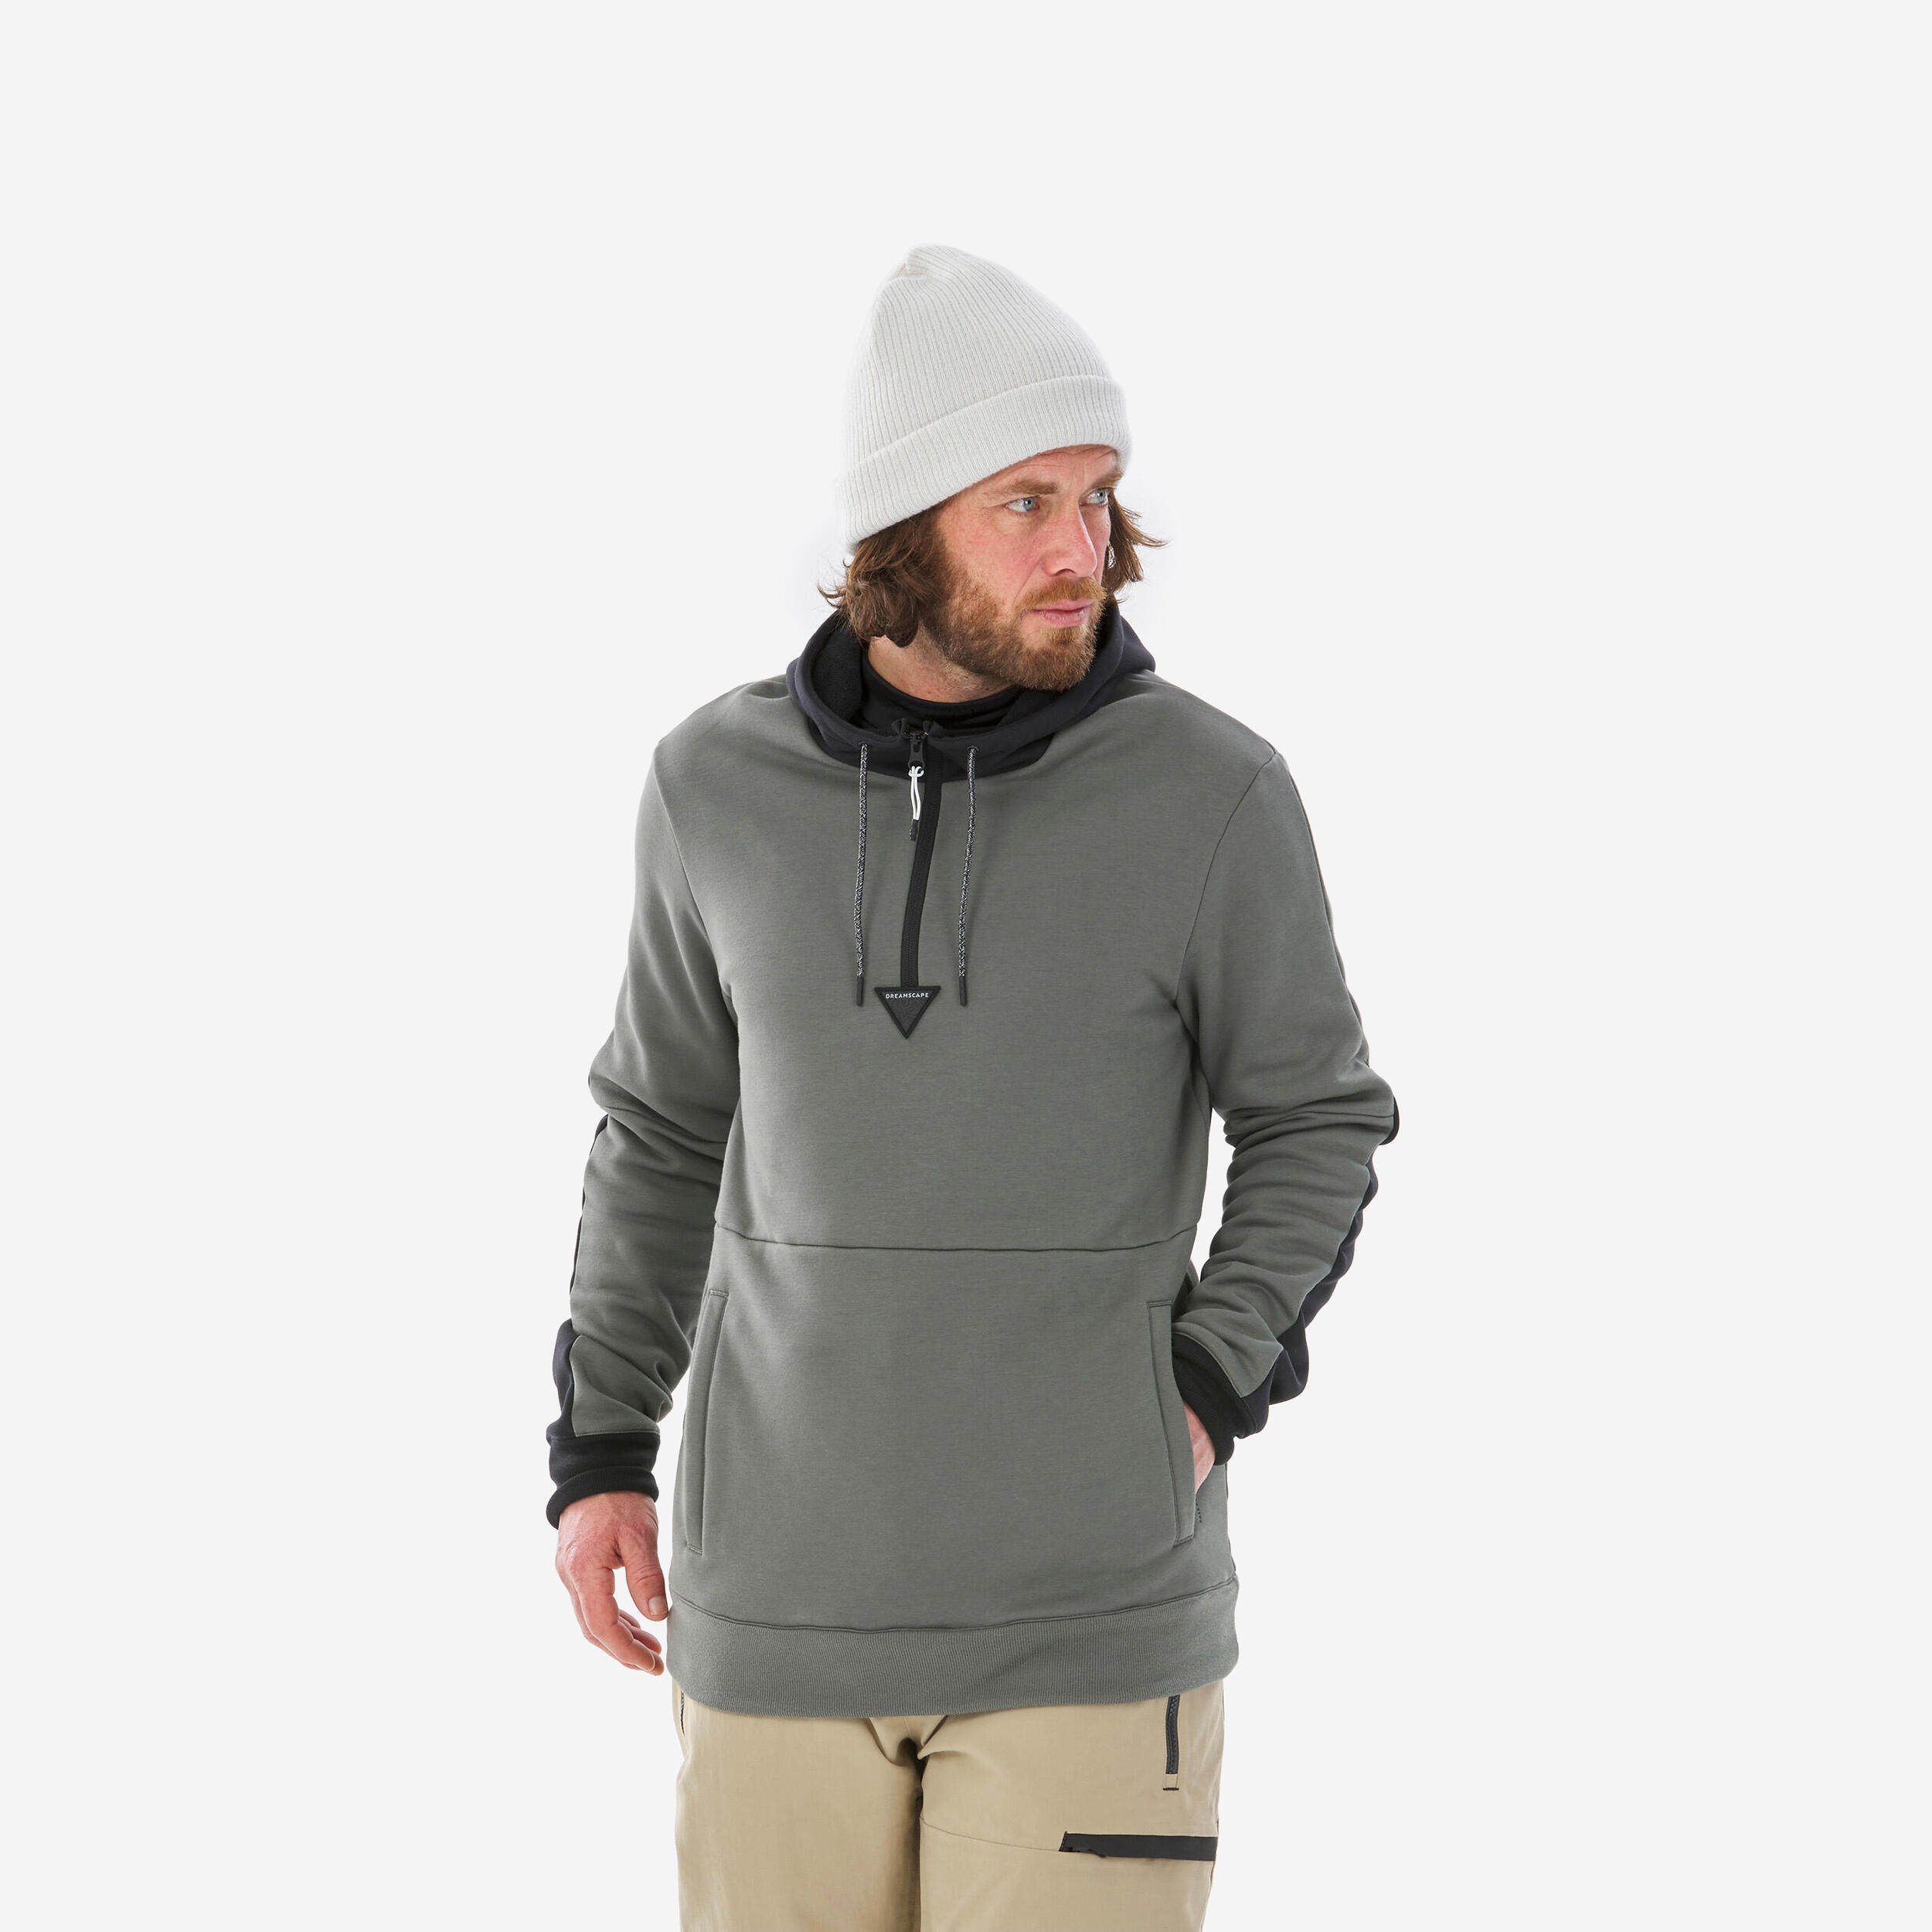 DREAMSCAPE Men's Hooded Snowboard Sweatshirt - SNB HDY Khaki